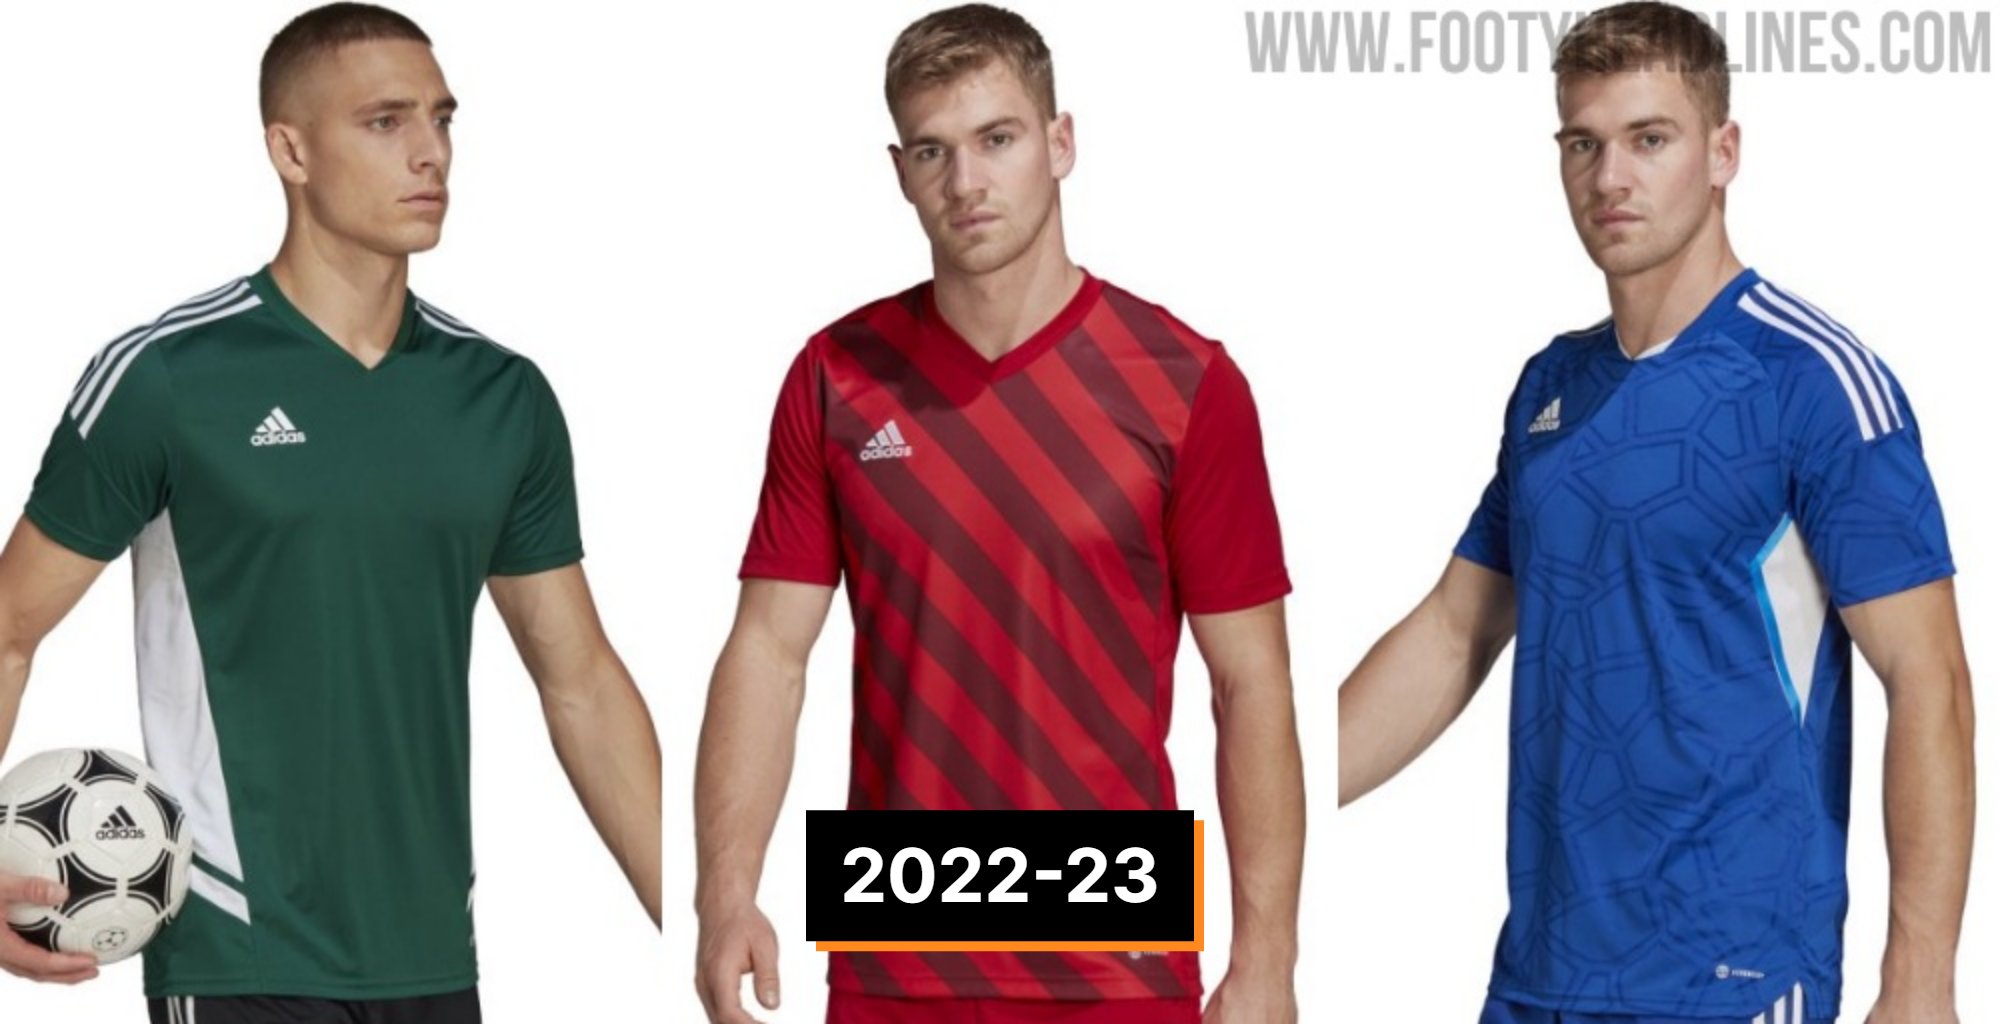 All Adidas 2022-23 Teamwear Released - 4 Options - Footy Headlines